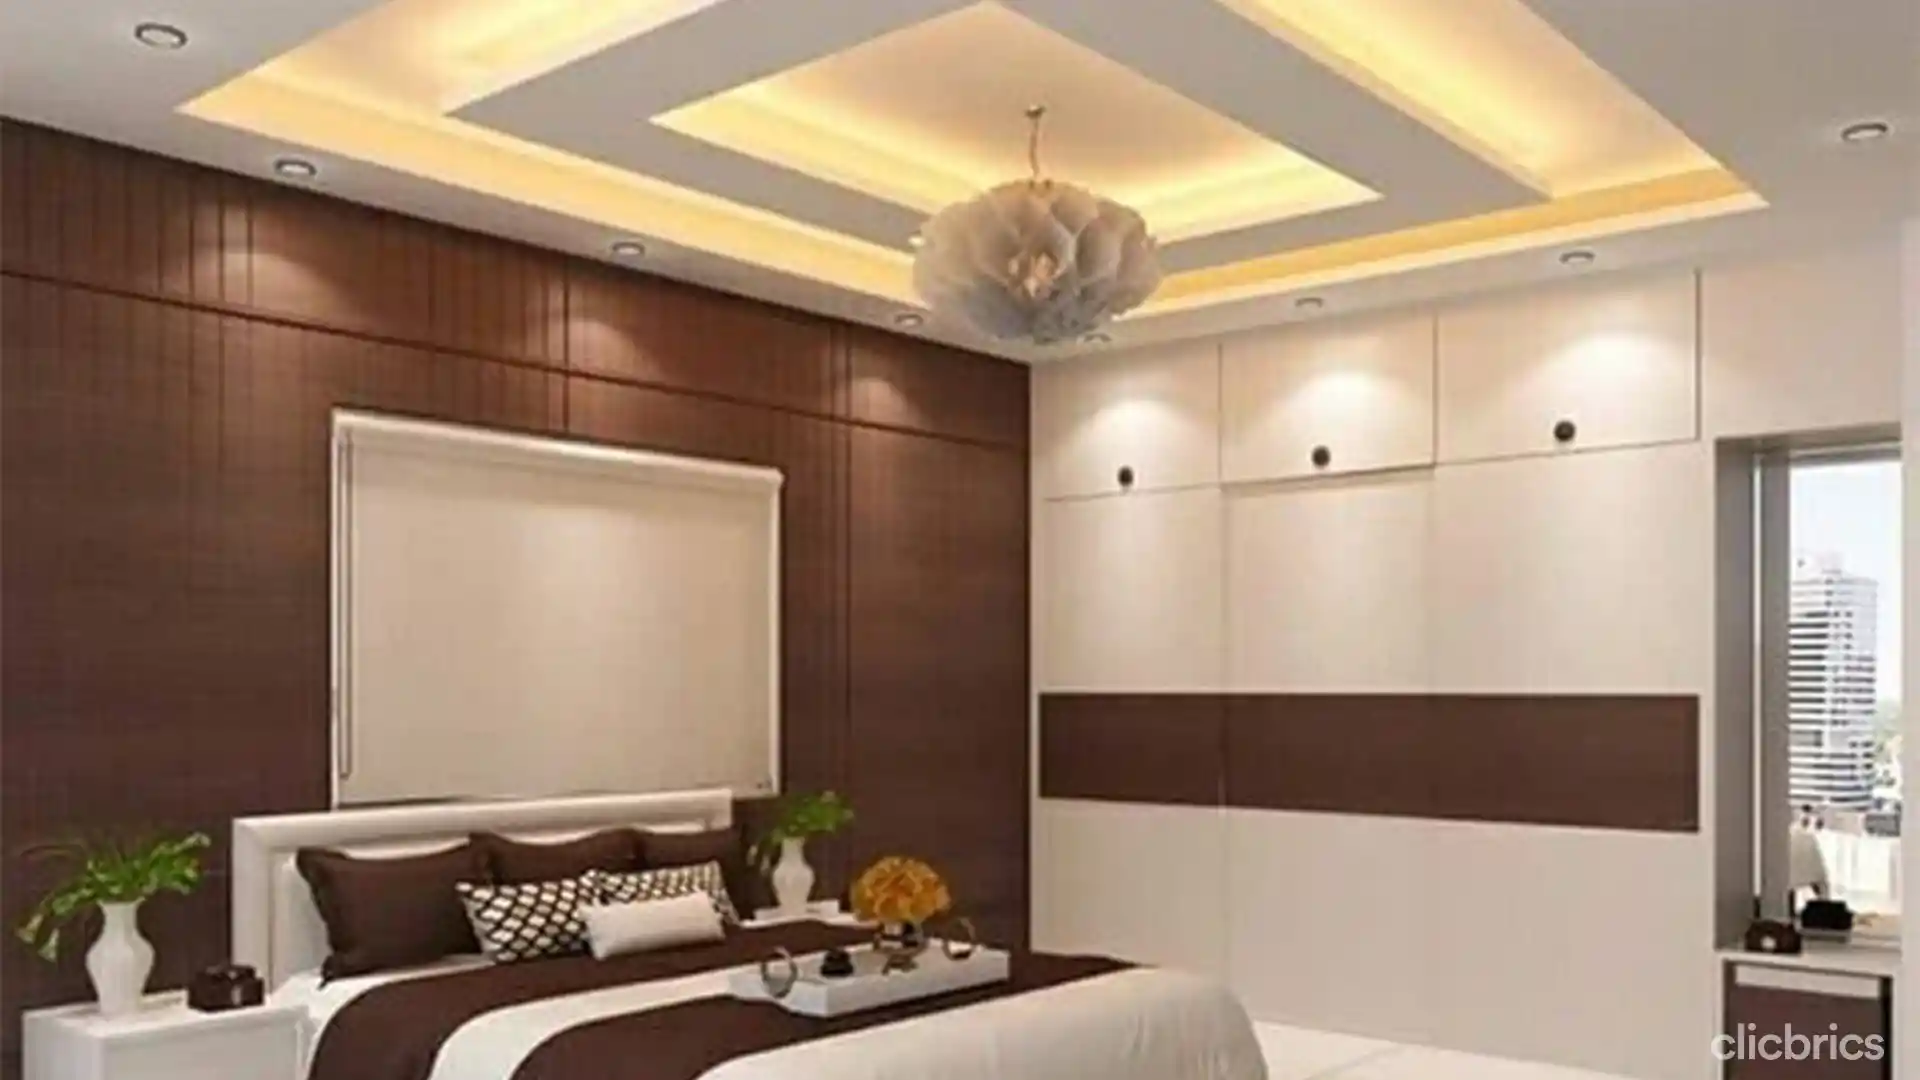  1662702656180 Modern False Ceiling Design For Bedrooms Should Be Fashionably Geometric.webp